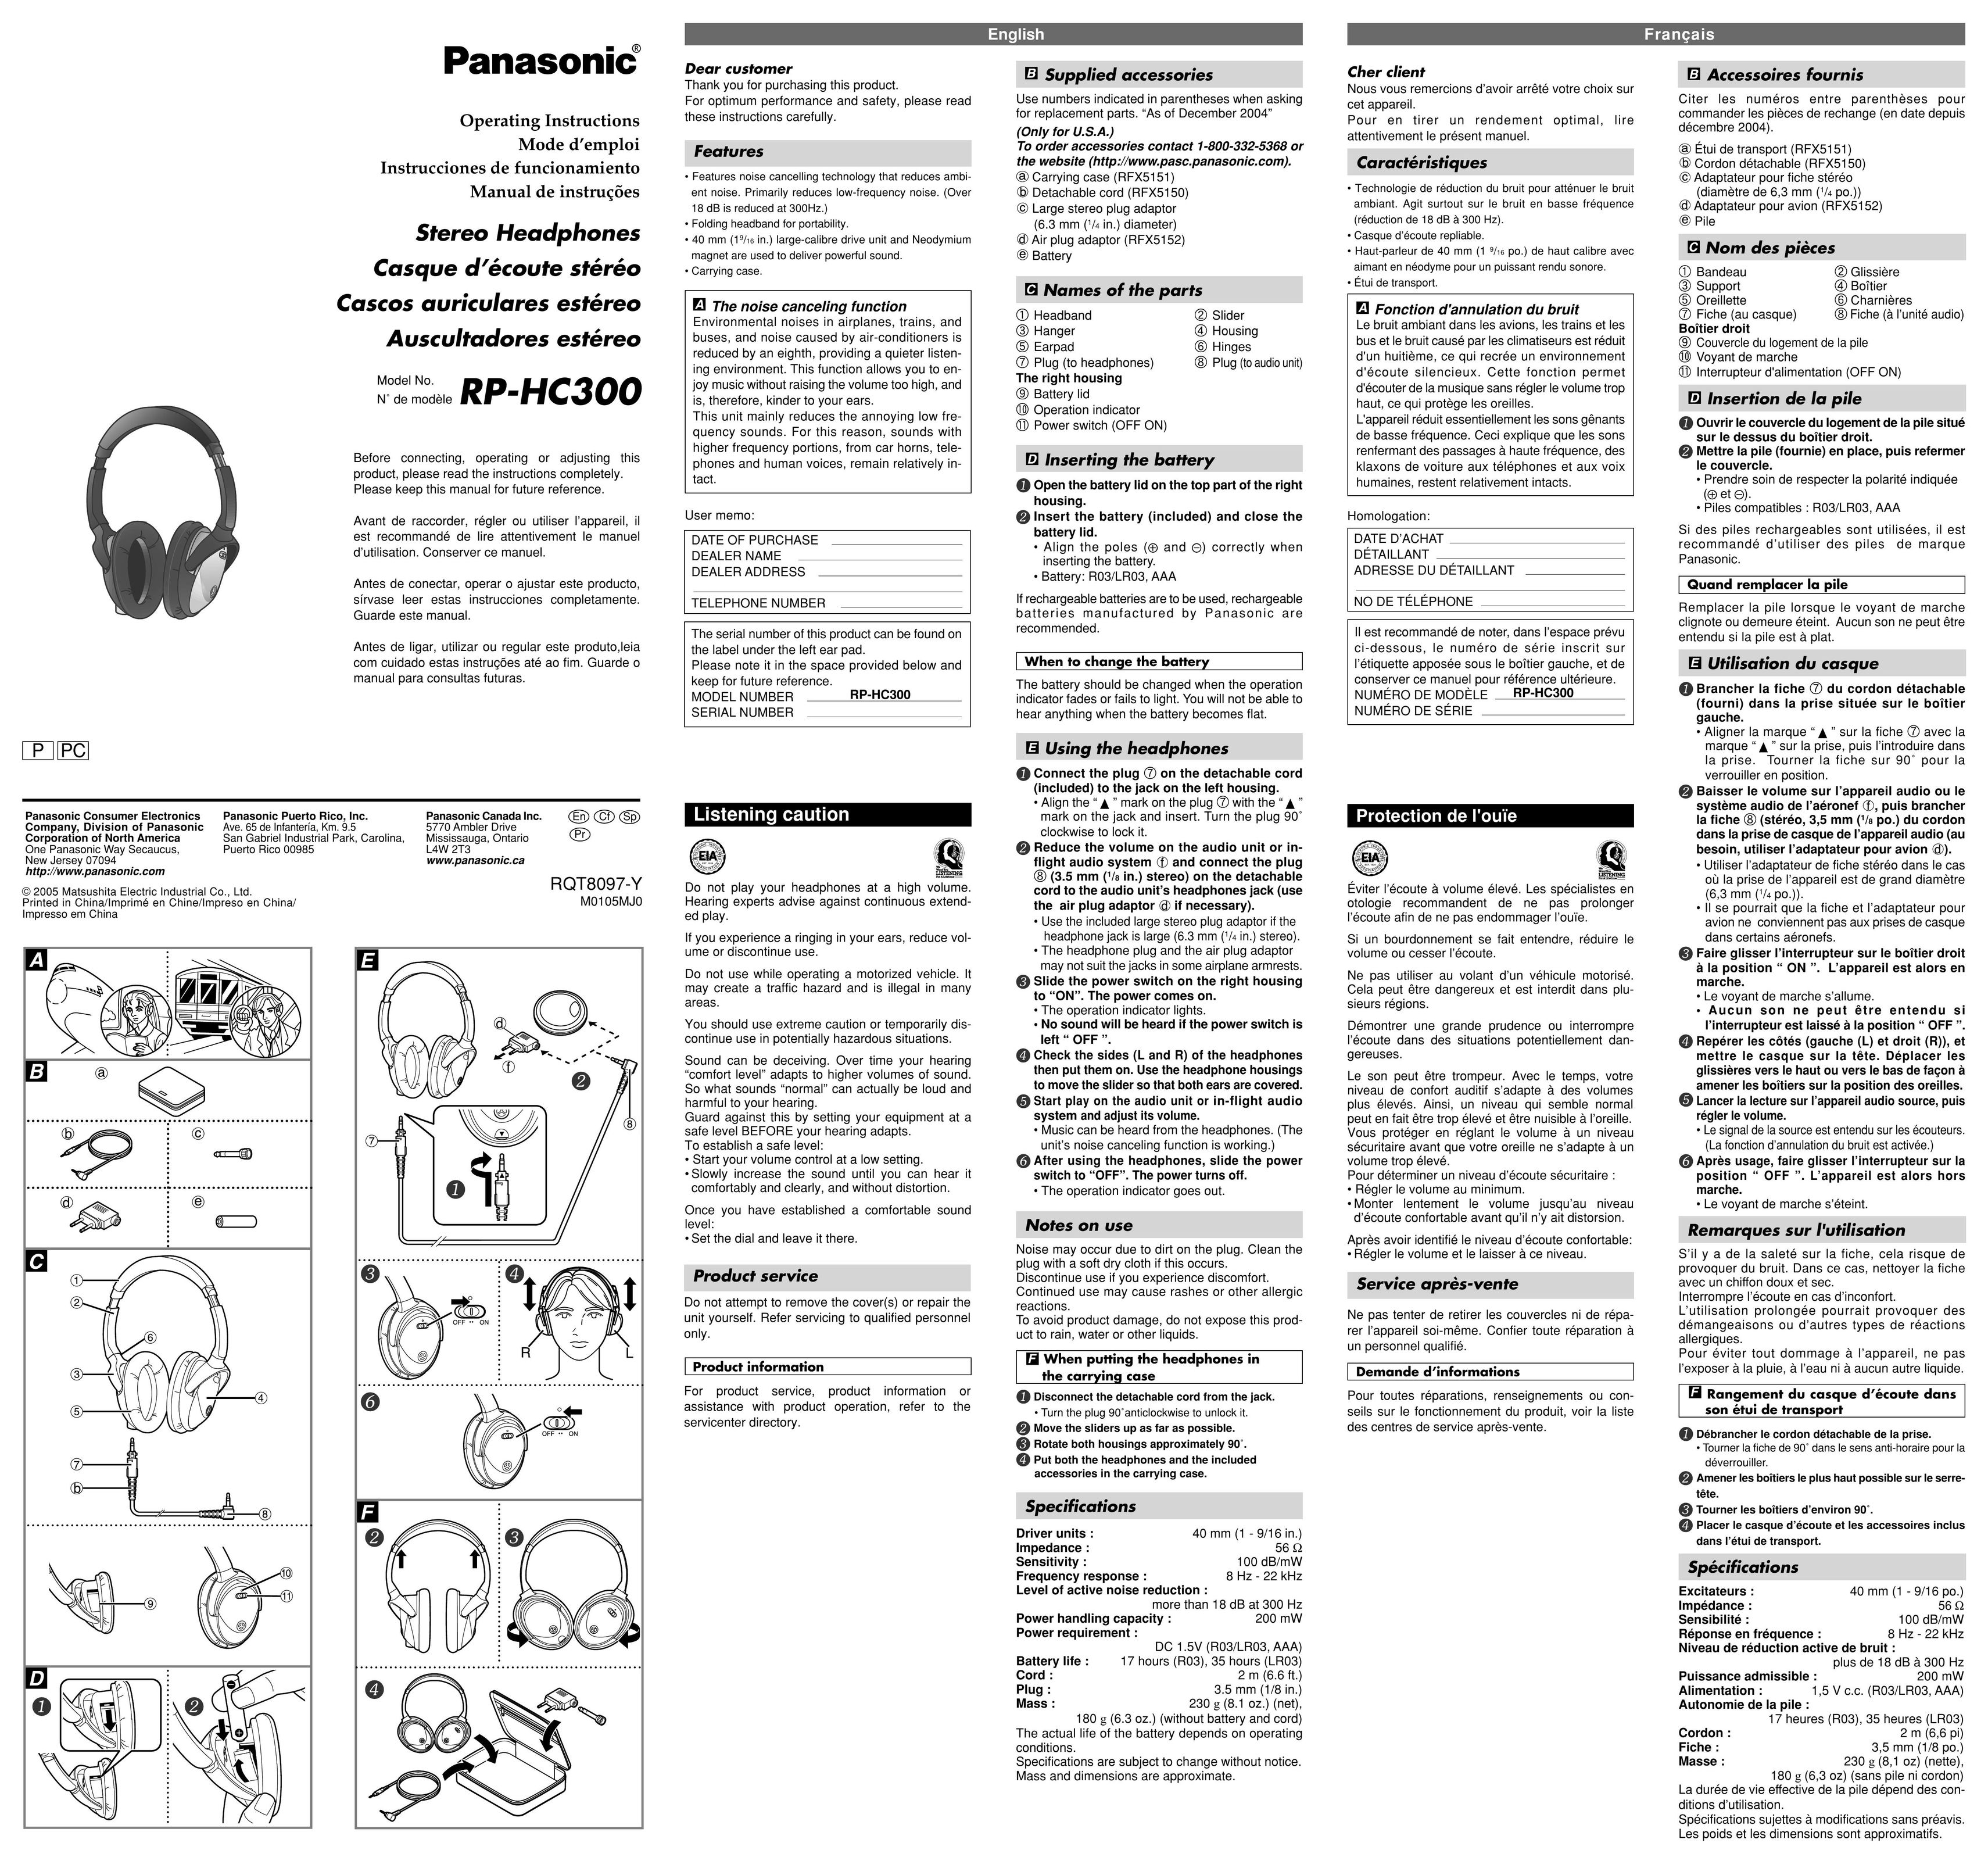 Panasonic RP-HC300 Headphones User Manual